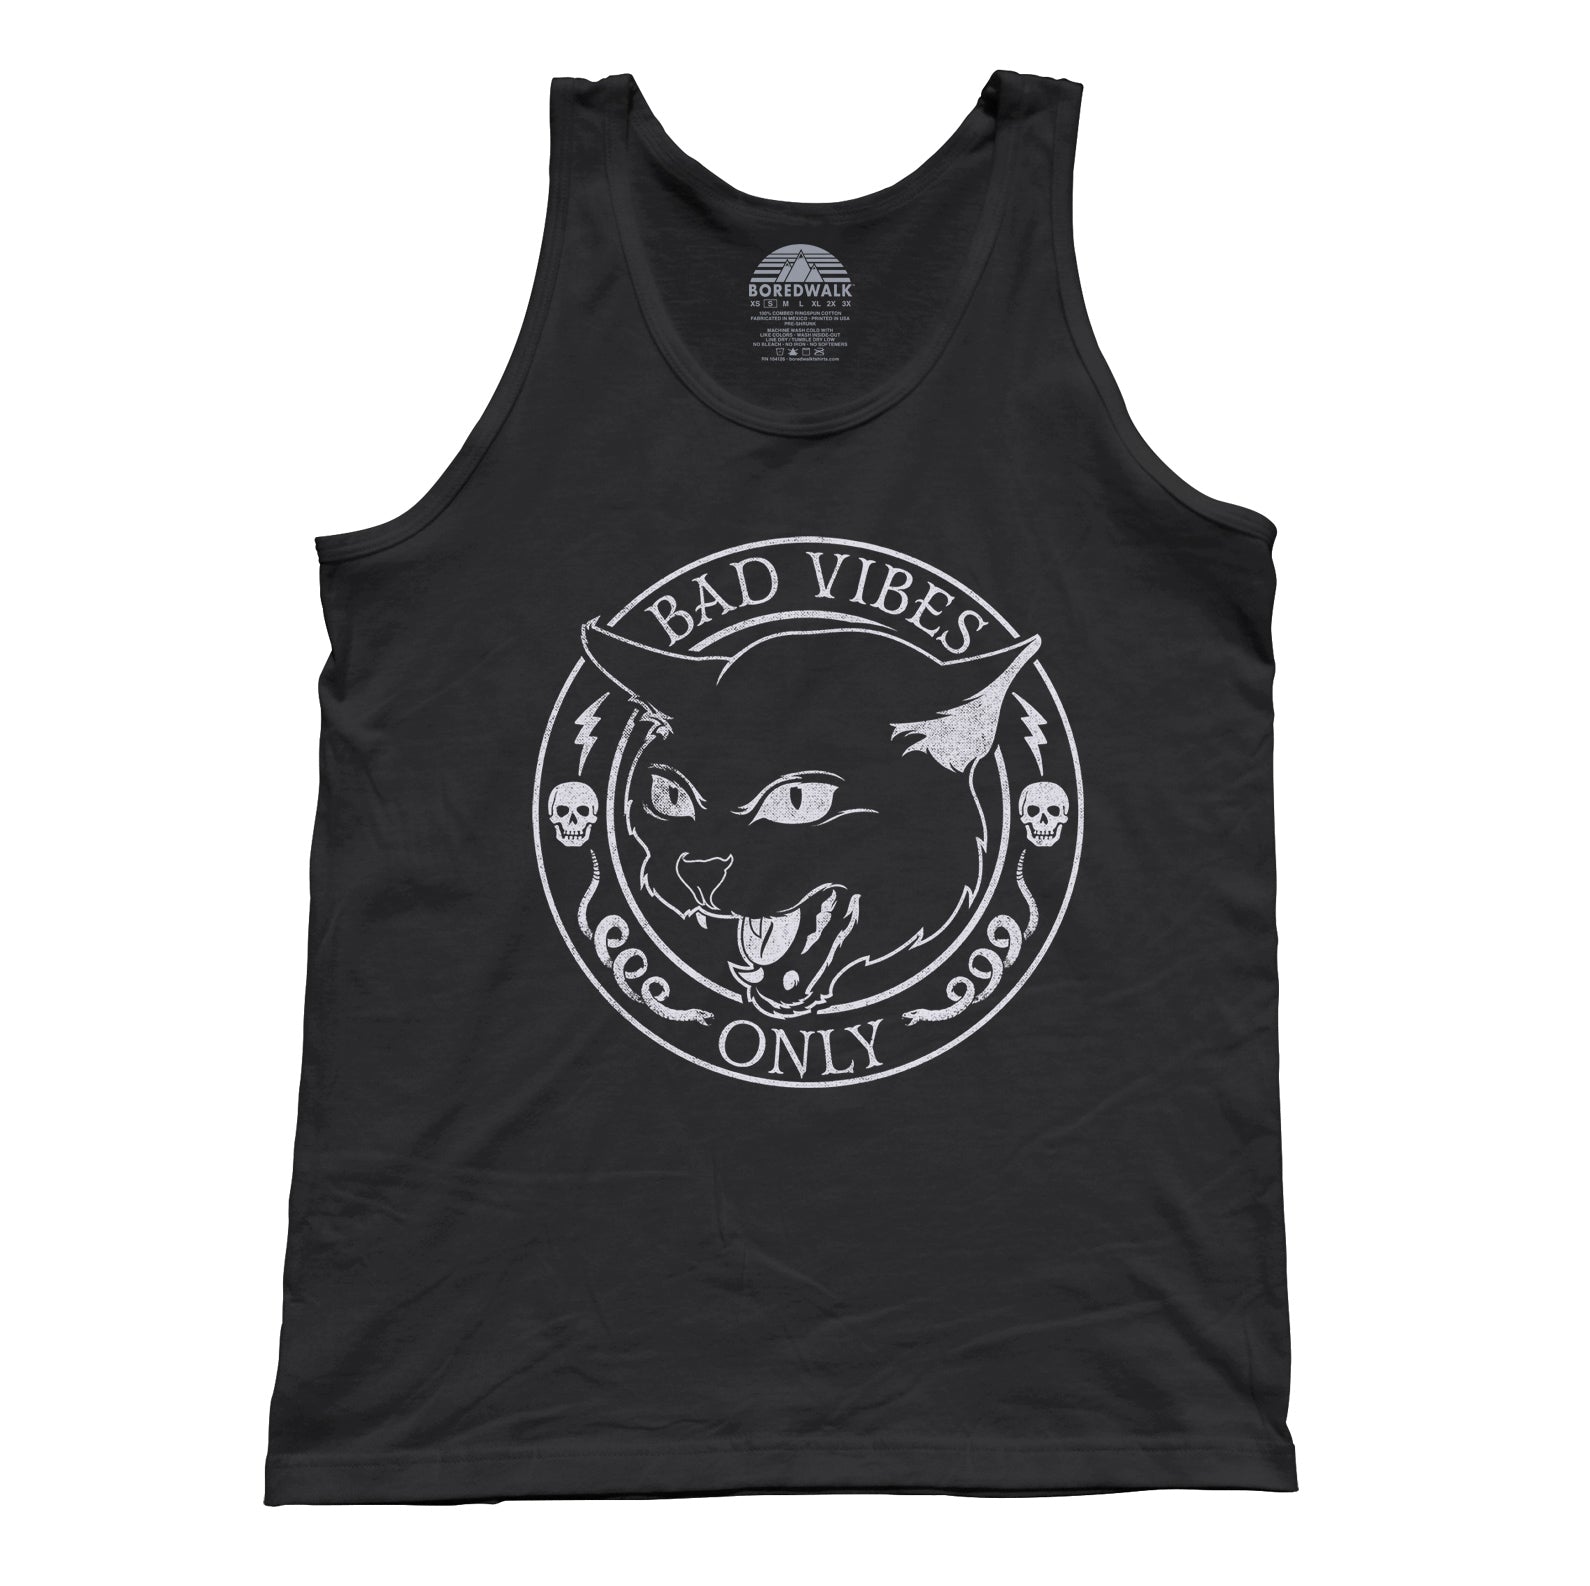 Unisex Bad Vibes Only Tank Top - Goth Shirt - Black Cat Shirt - Boredwalk